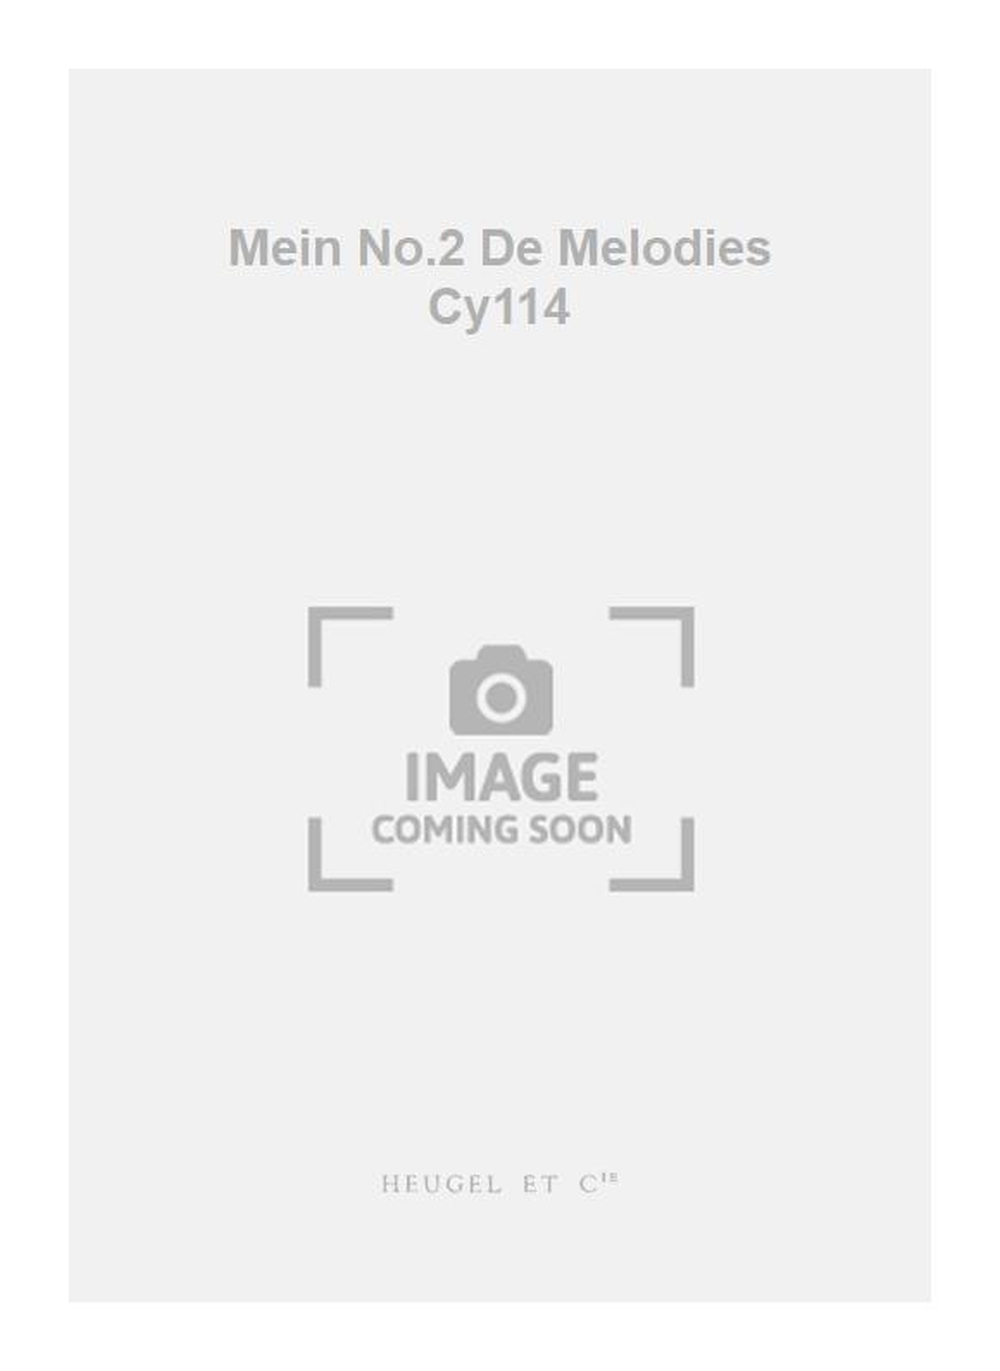 Jean Mein: Mein No.2 De Melodies Cy114